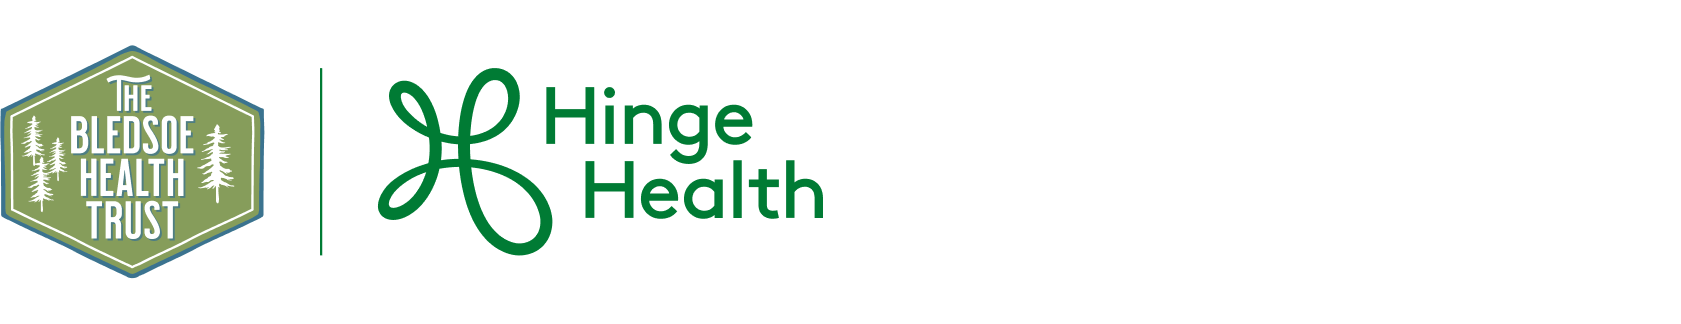 Bledsoe Health Trust | HingeHealth